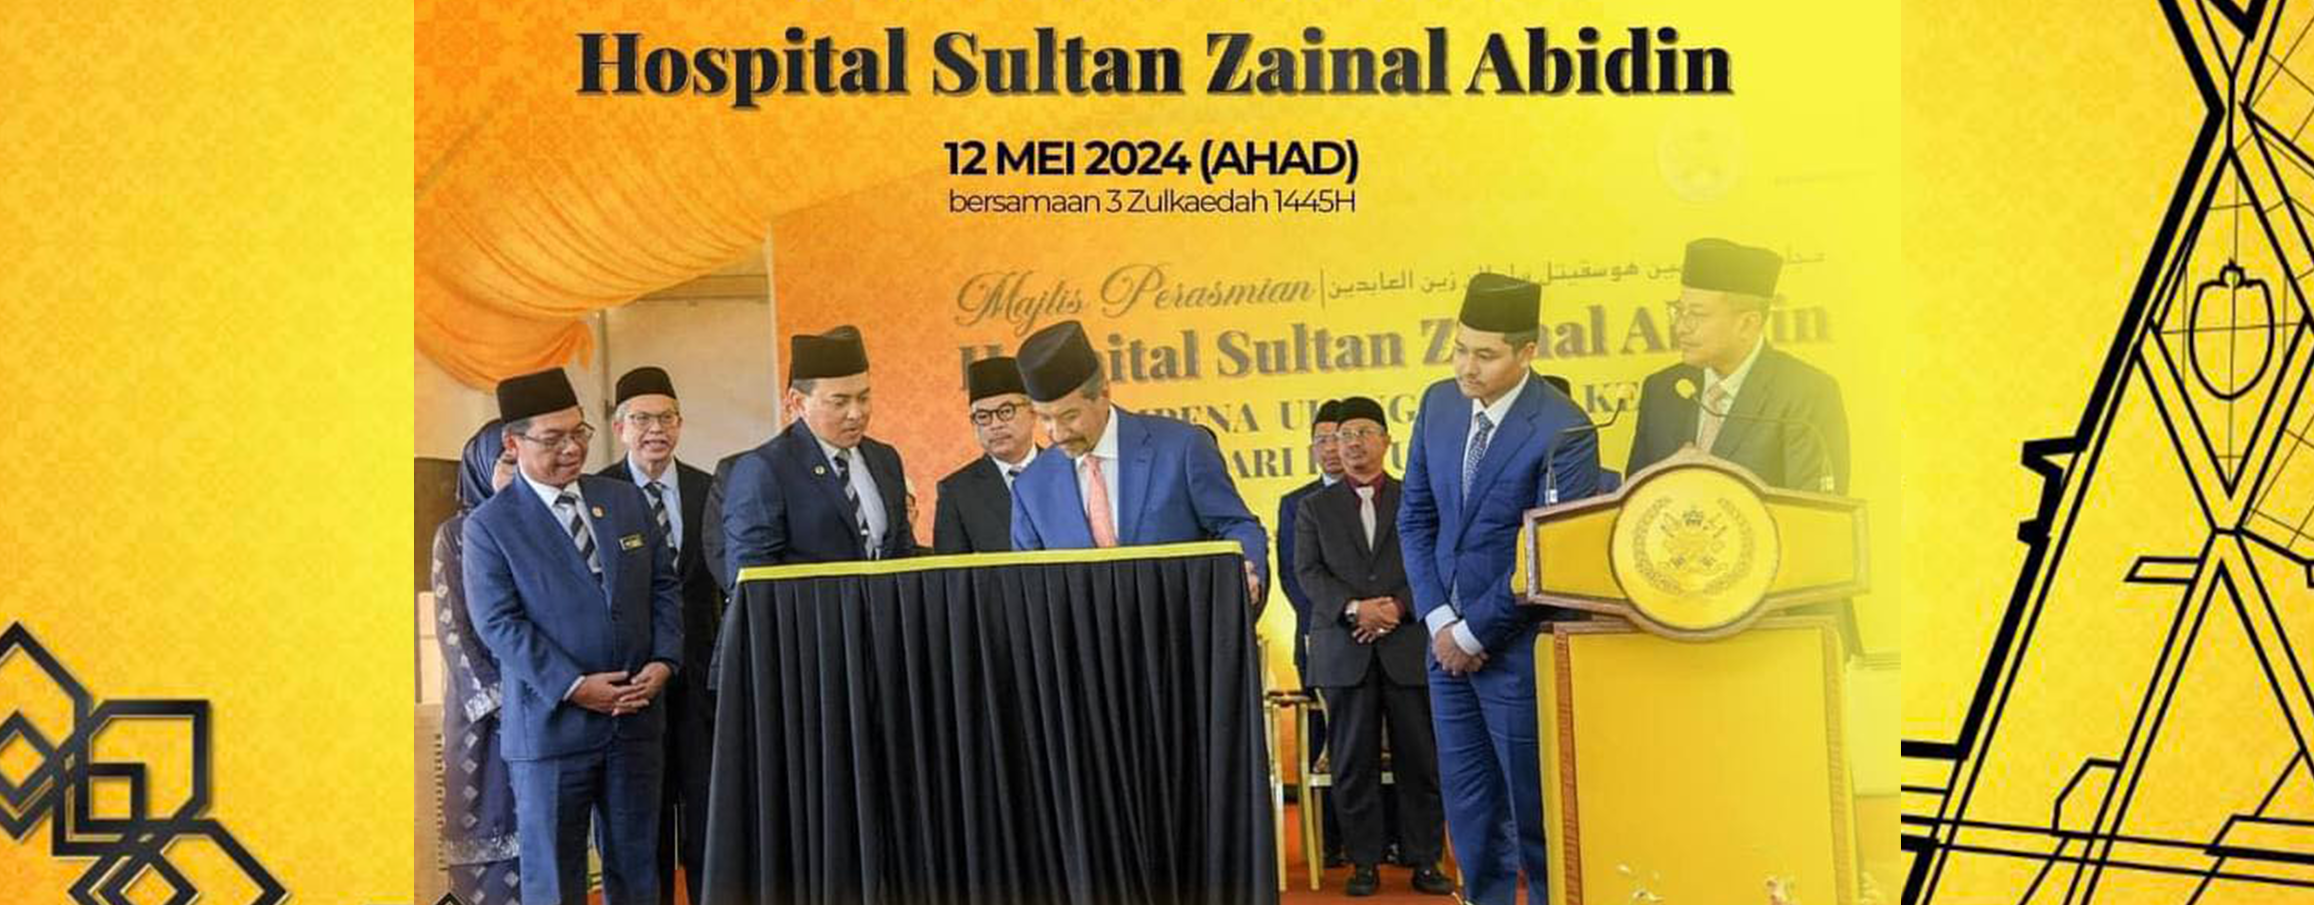 Hospital Sultan Zainal Abidin